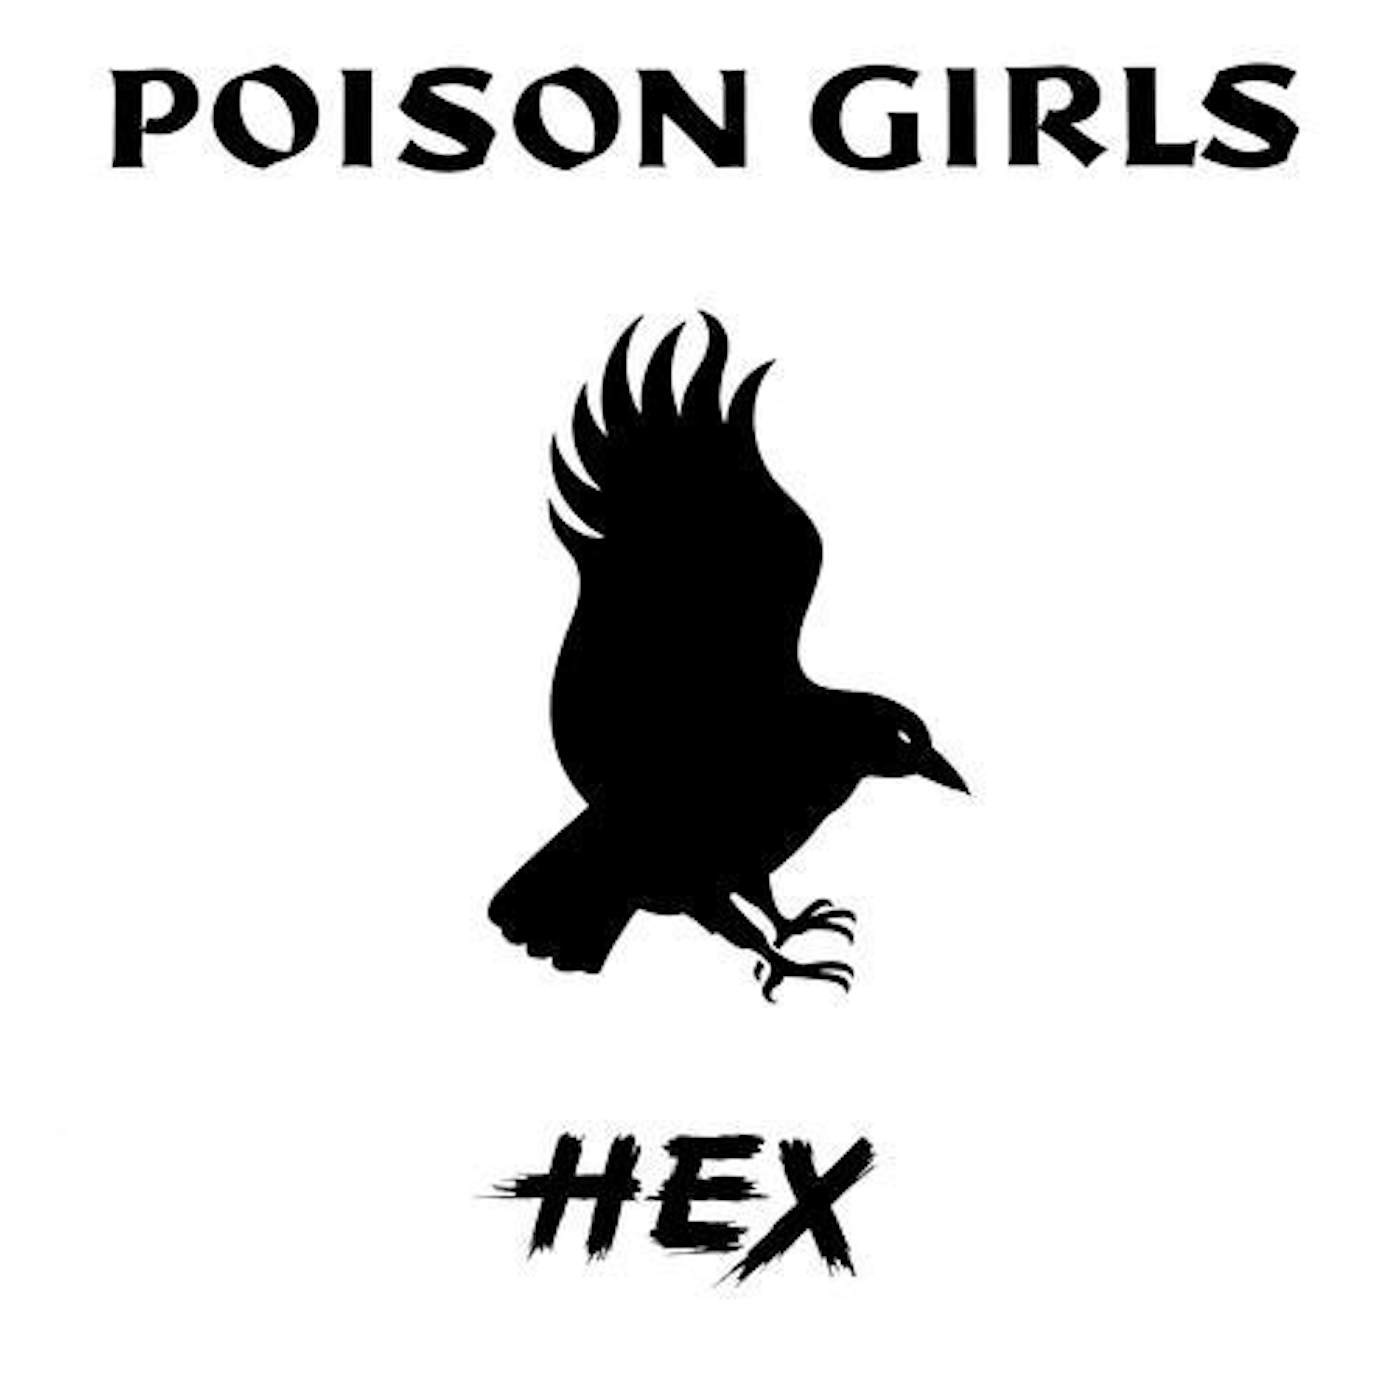 Poison Girls Hex Vinyl Record